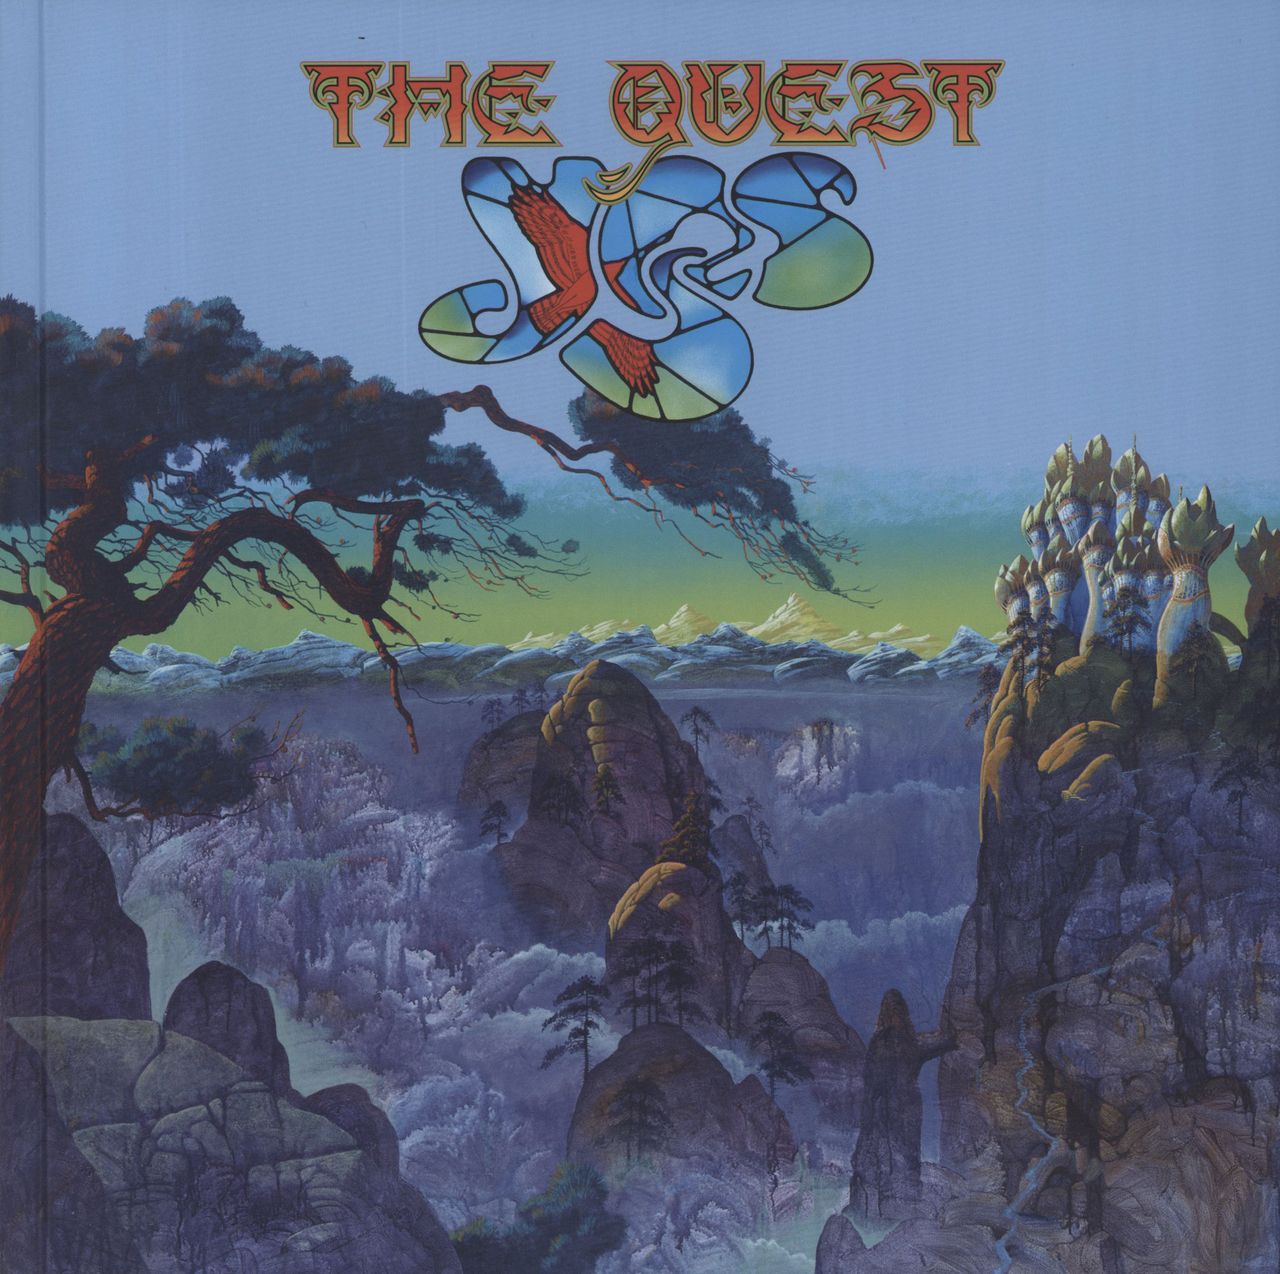 Yes The Quest: Deluxe Artbook UK 3-disc CD/DVD Set IOMLTDCD601